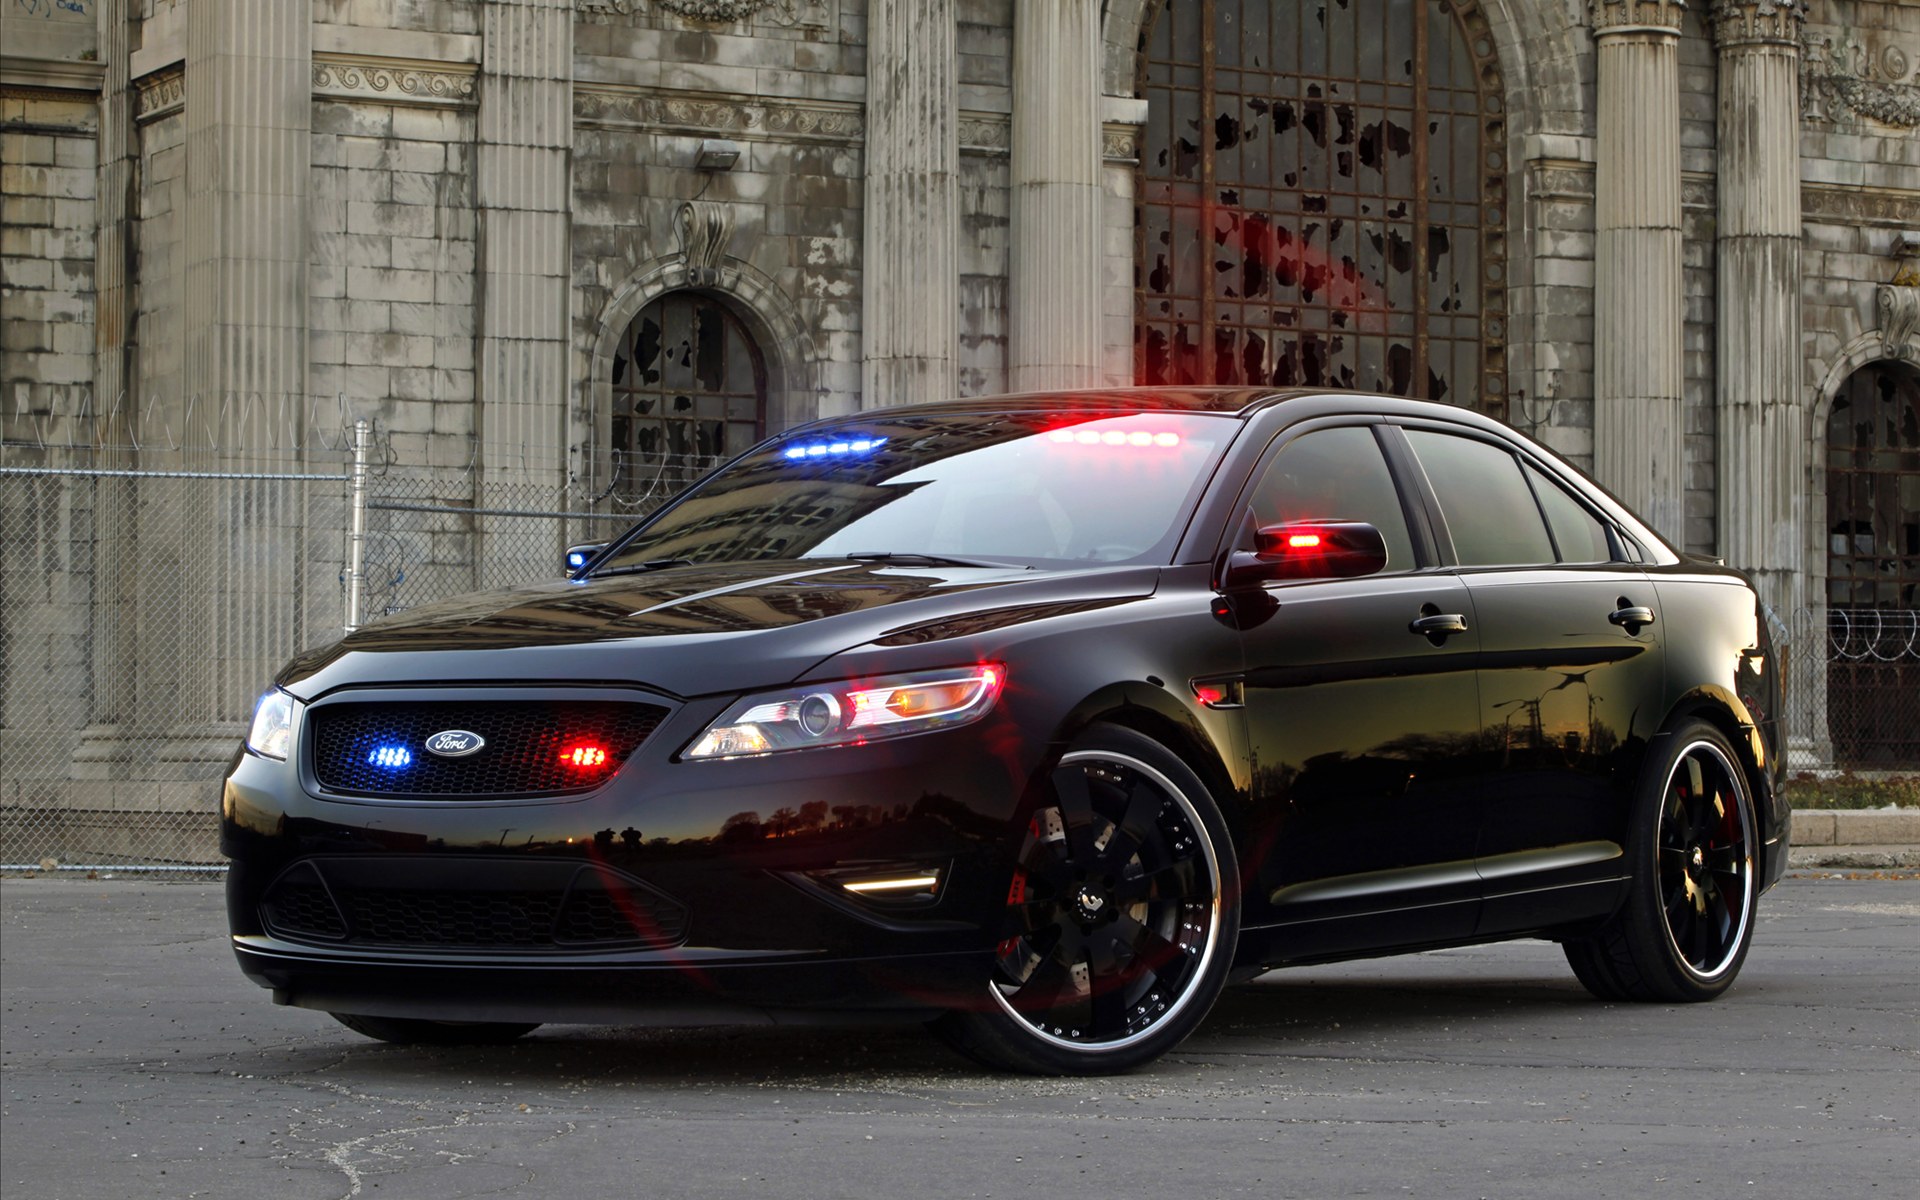 police-car-hd-ford-stealth-interceptor-concept-auto-463570.jpg